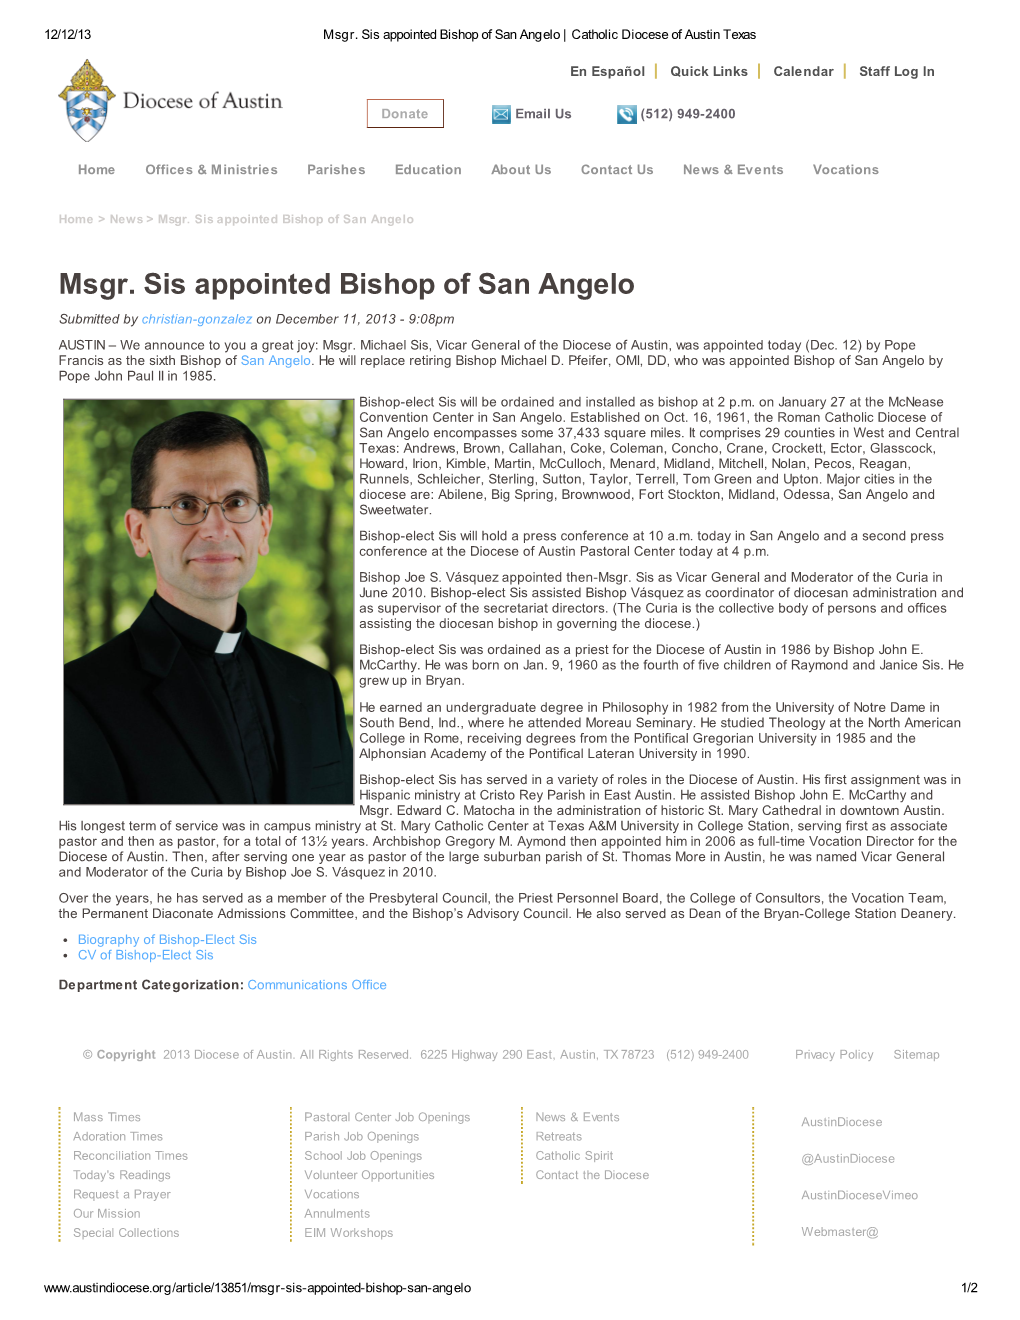 Msgr. Sis Appointed Bishop of San Angelo | Catholic Diocese of Austin Texas